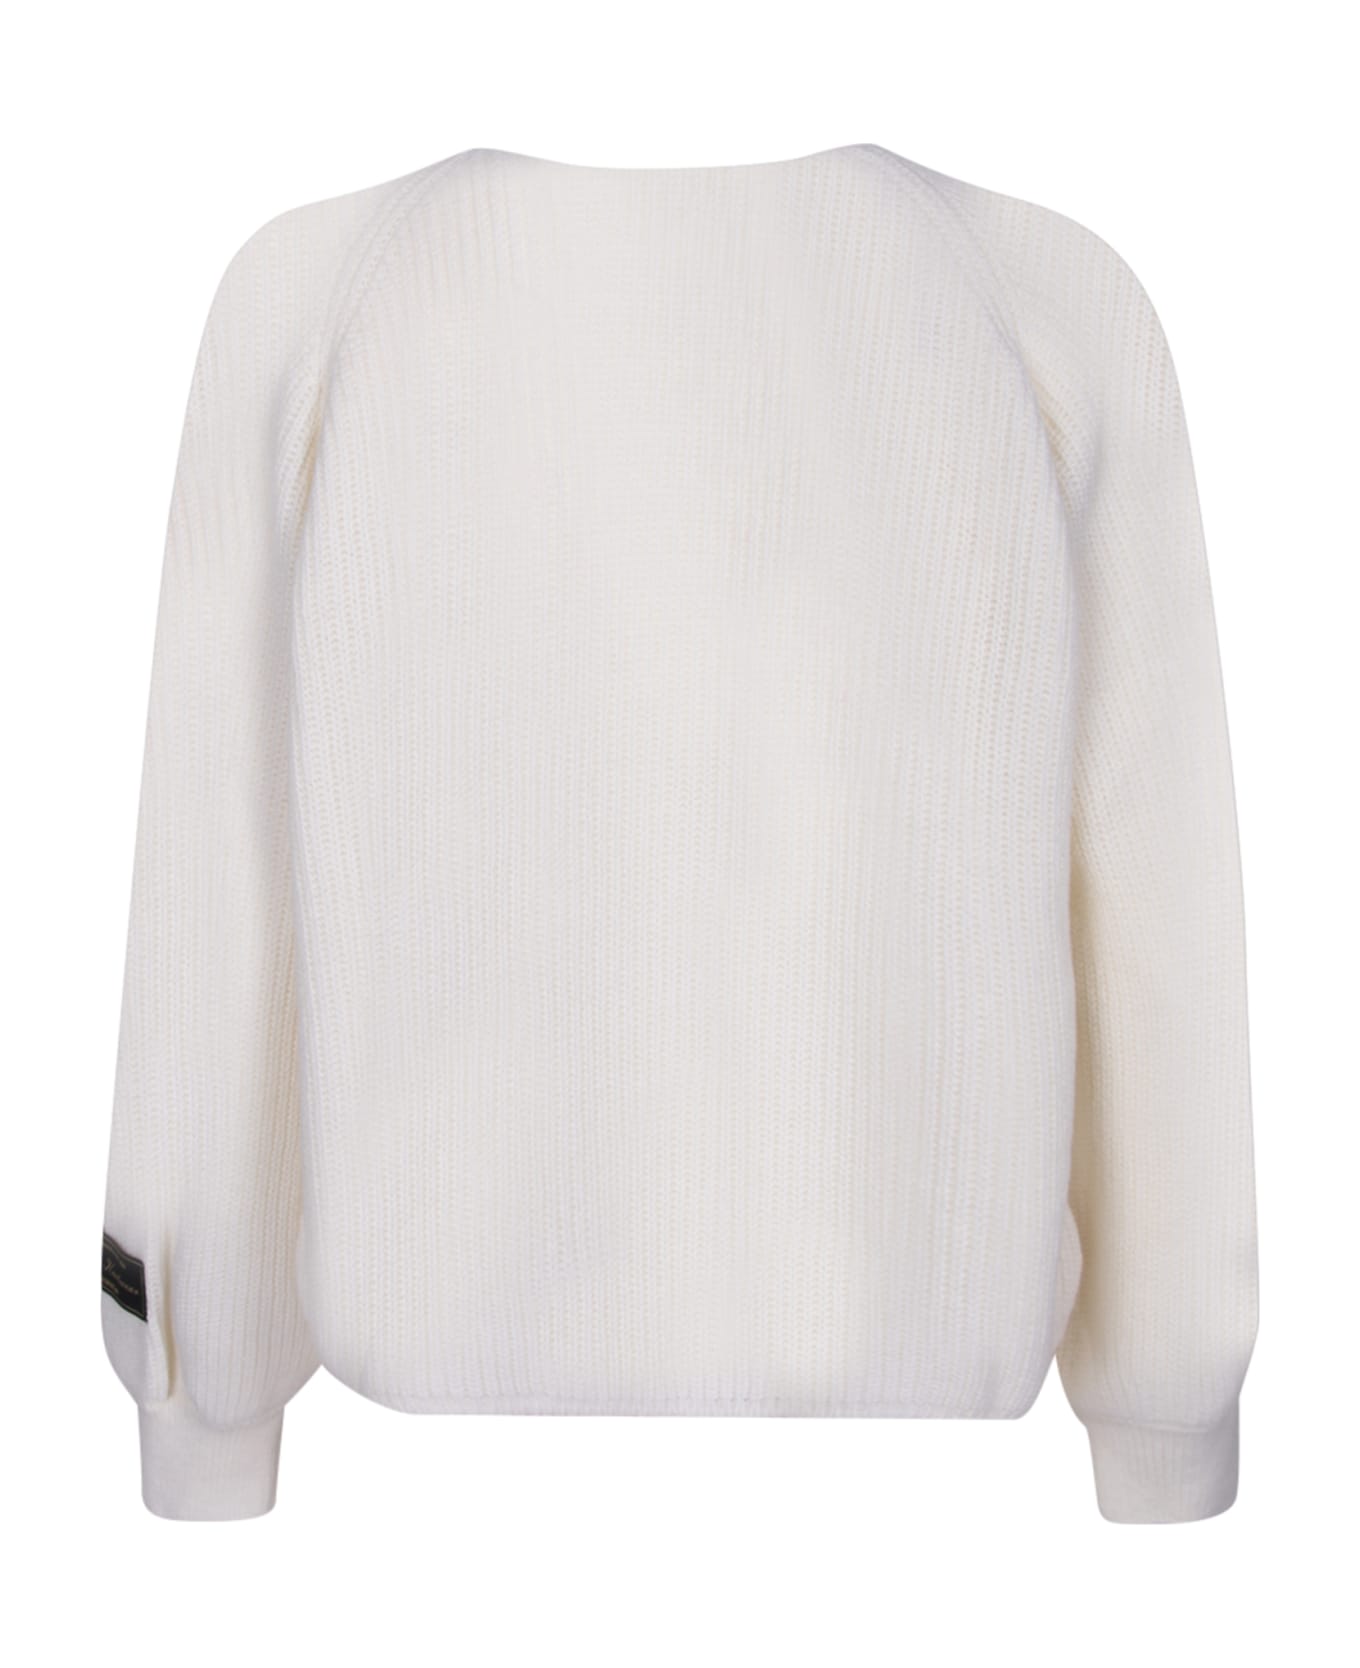 MSGM Knot Detail White Sweater - White